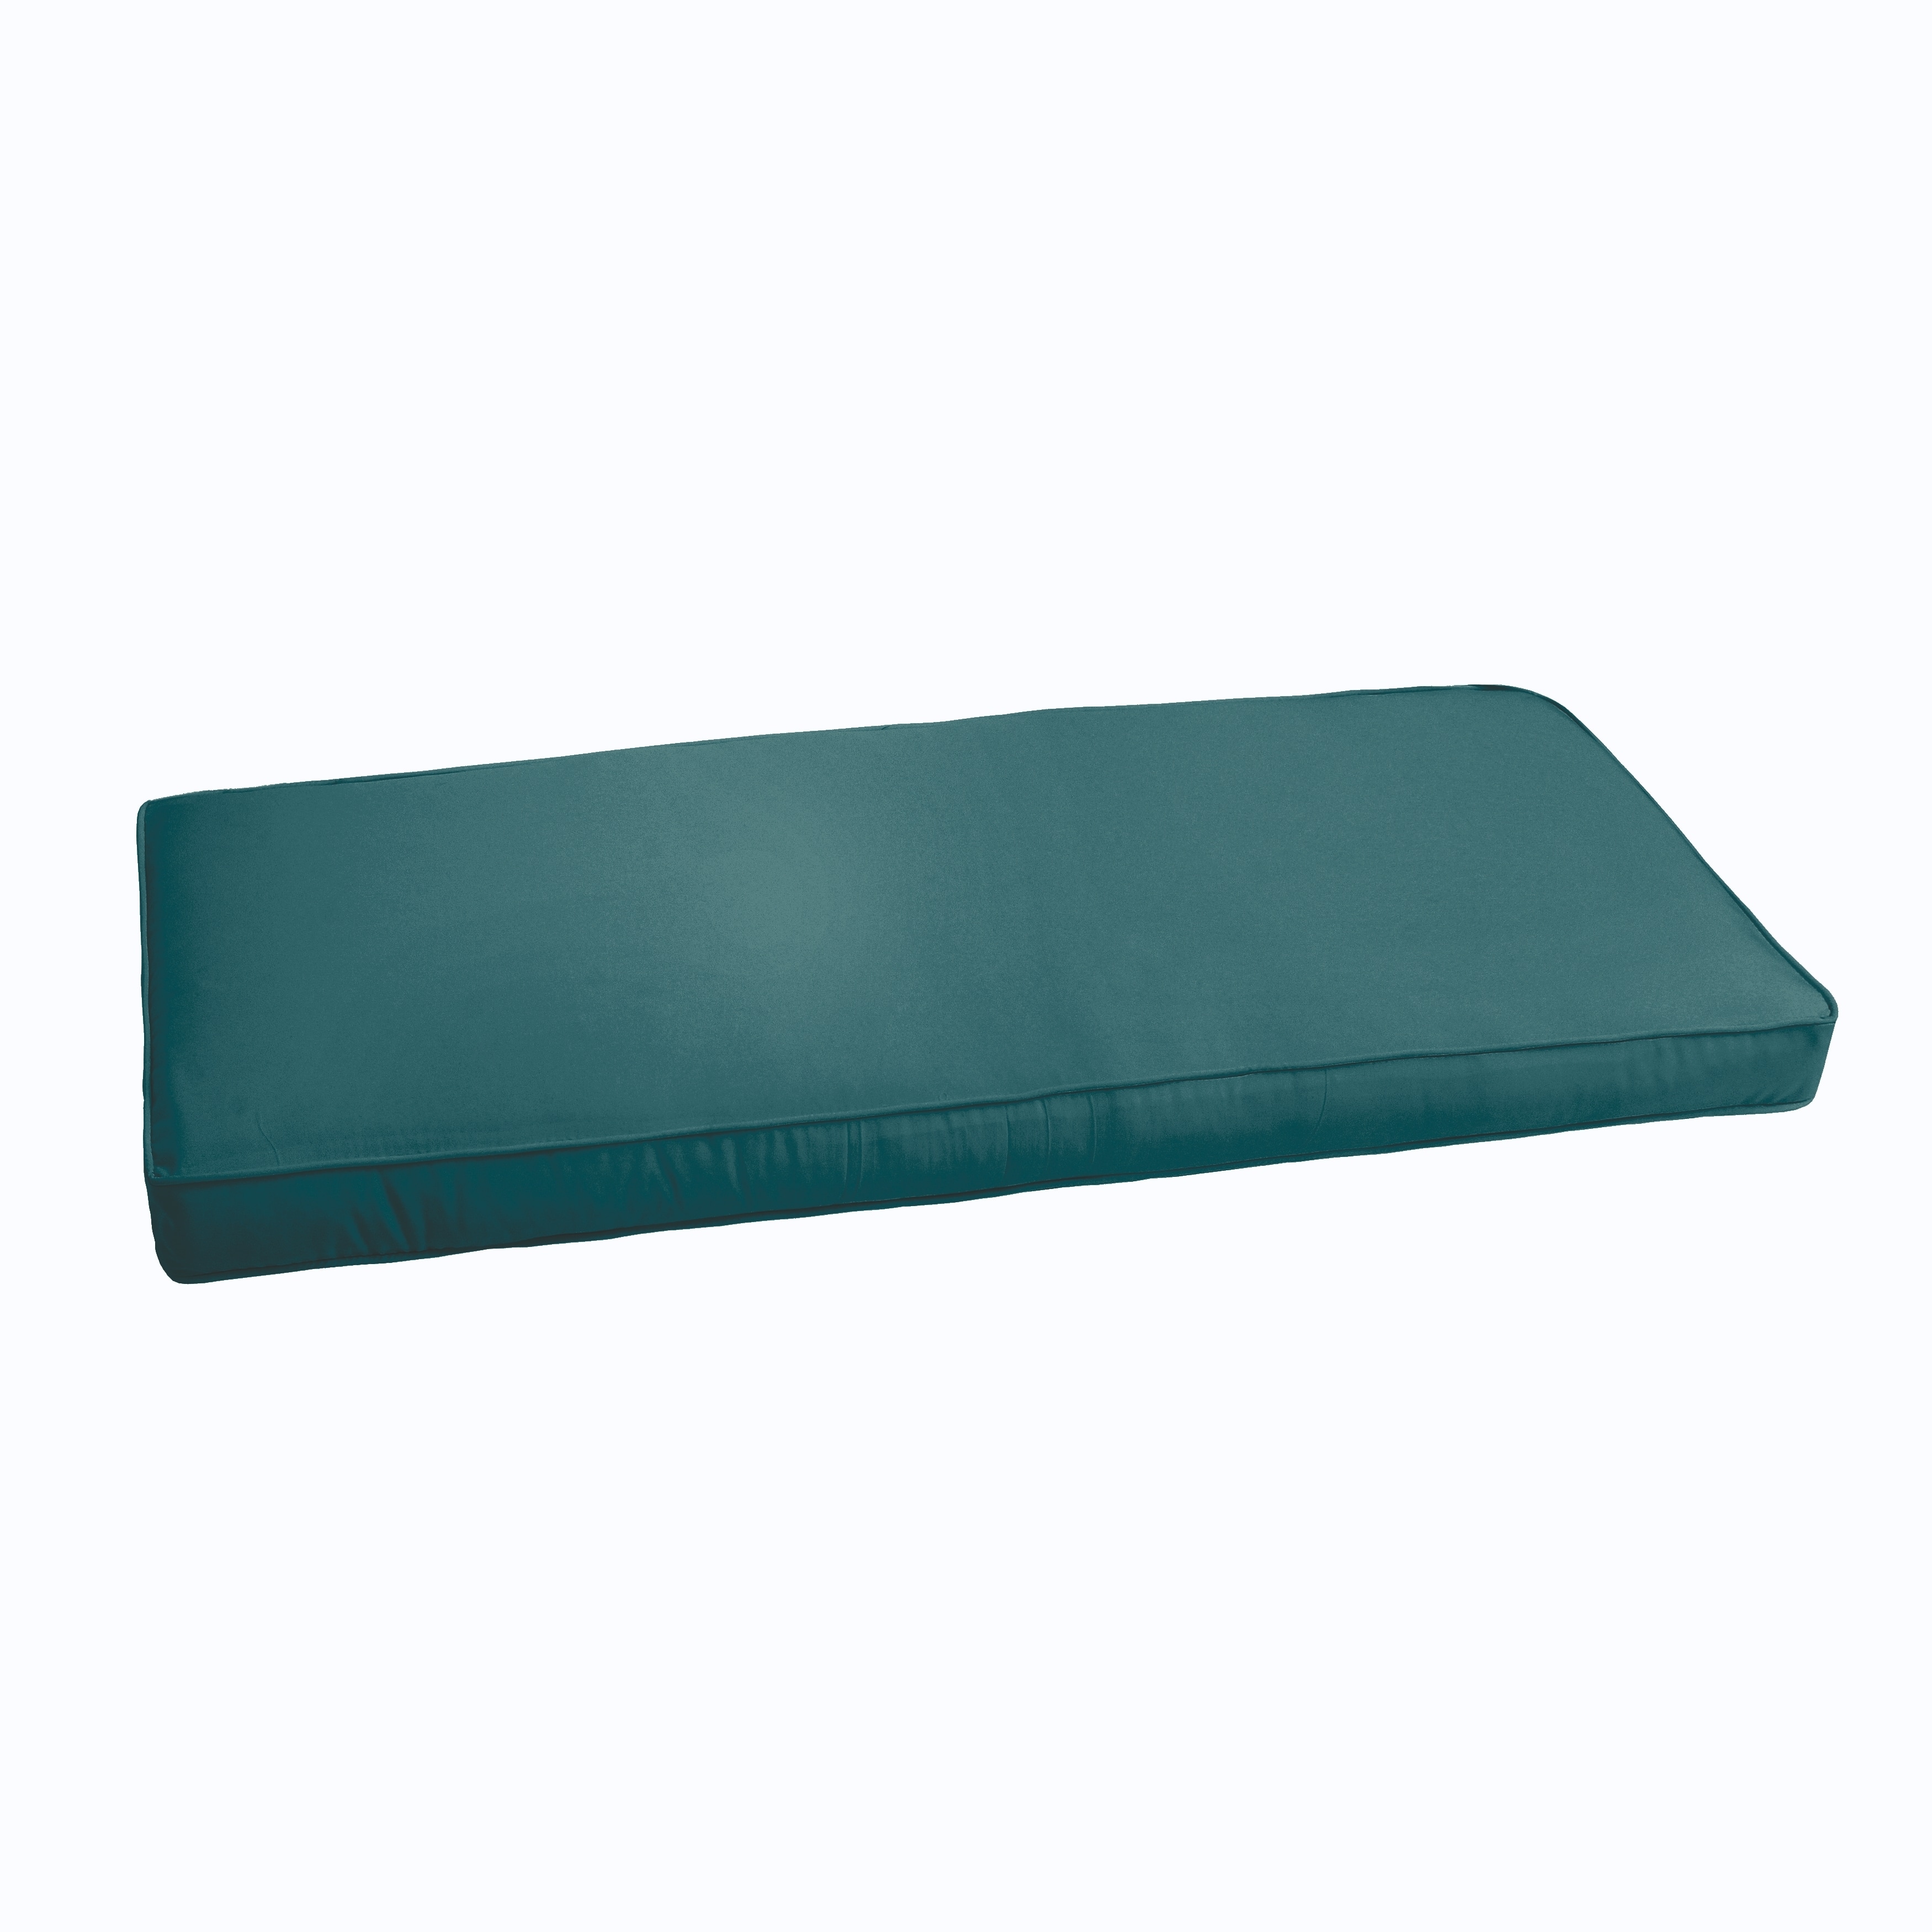 Sloane Teal 48 Inch Indoor Outdoor Corded Bench Cushion Overstock 11351716